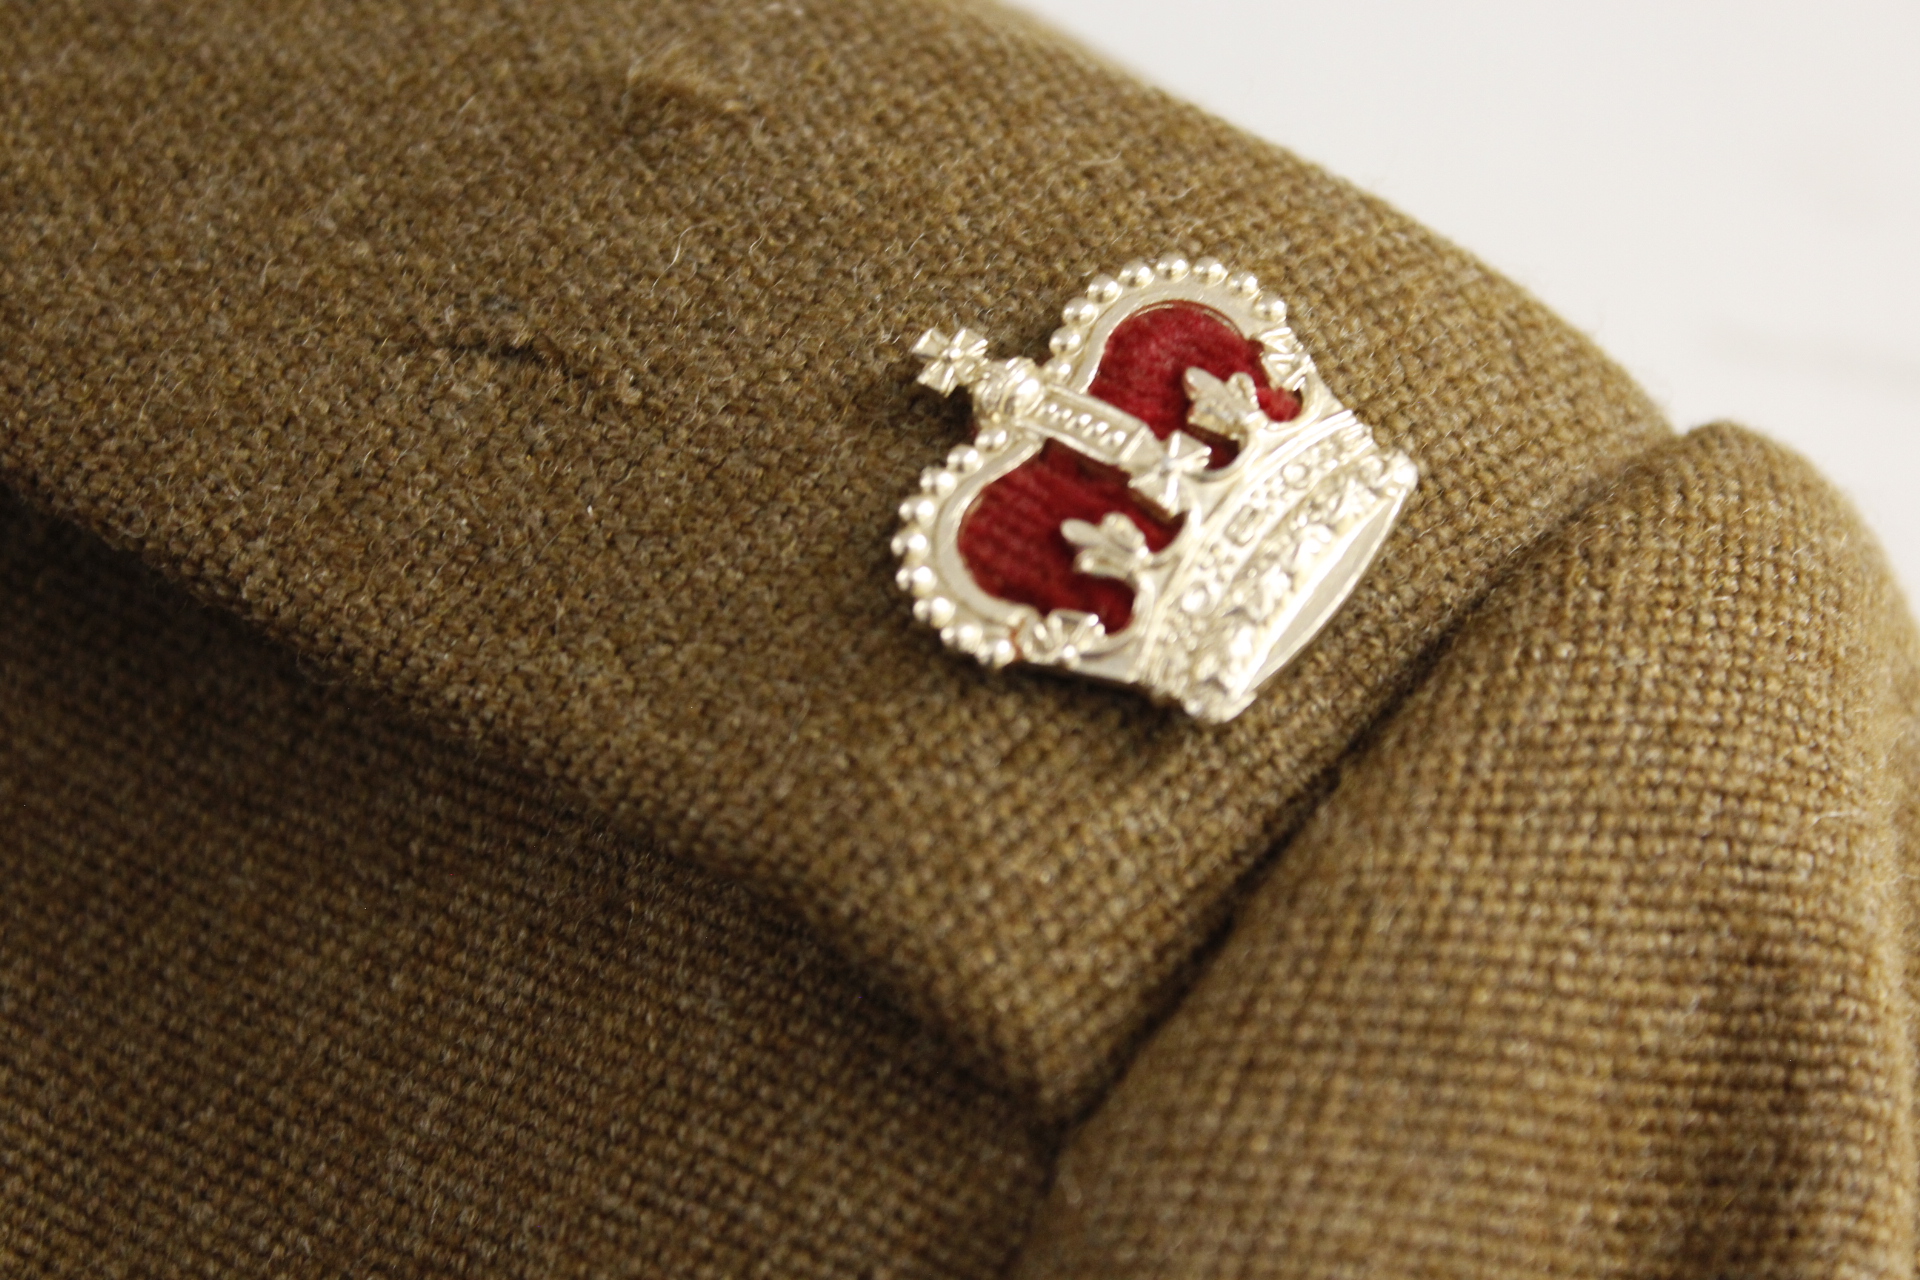 British Army dress uniform jacket having Meyer & Mortimer Ltd label "83 2 89 …..?", Scottish - Image 3 of 4